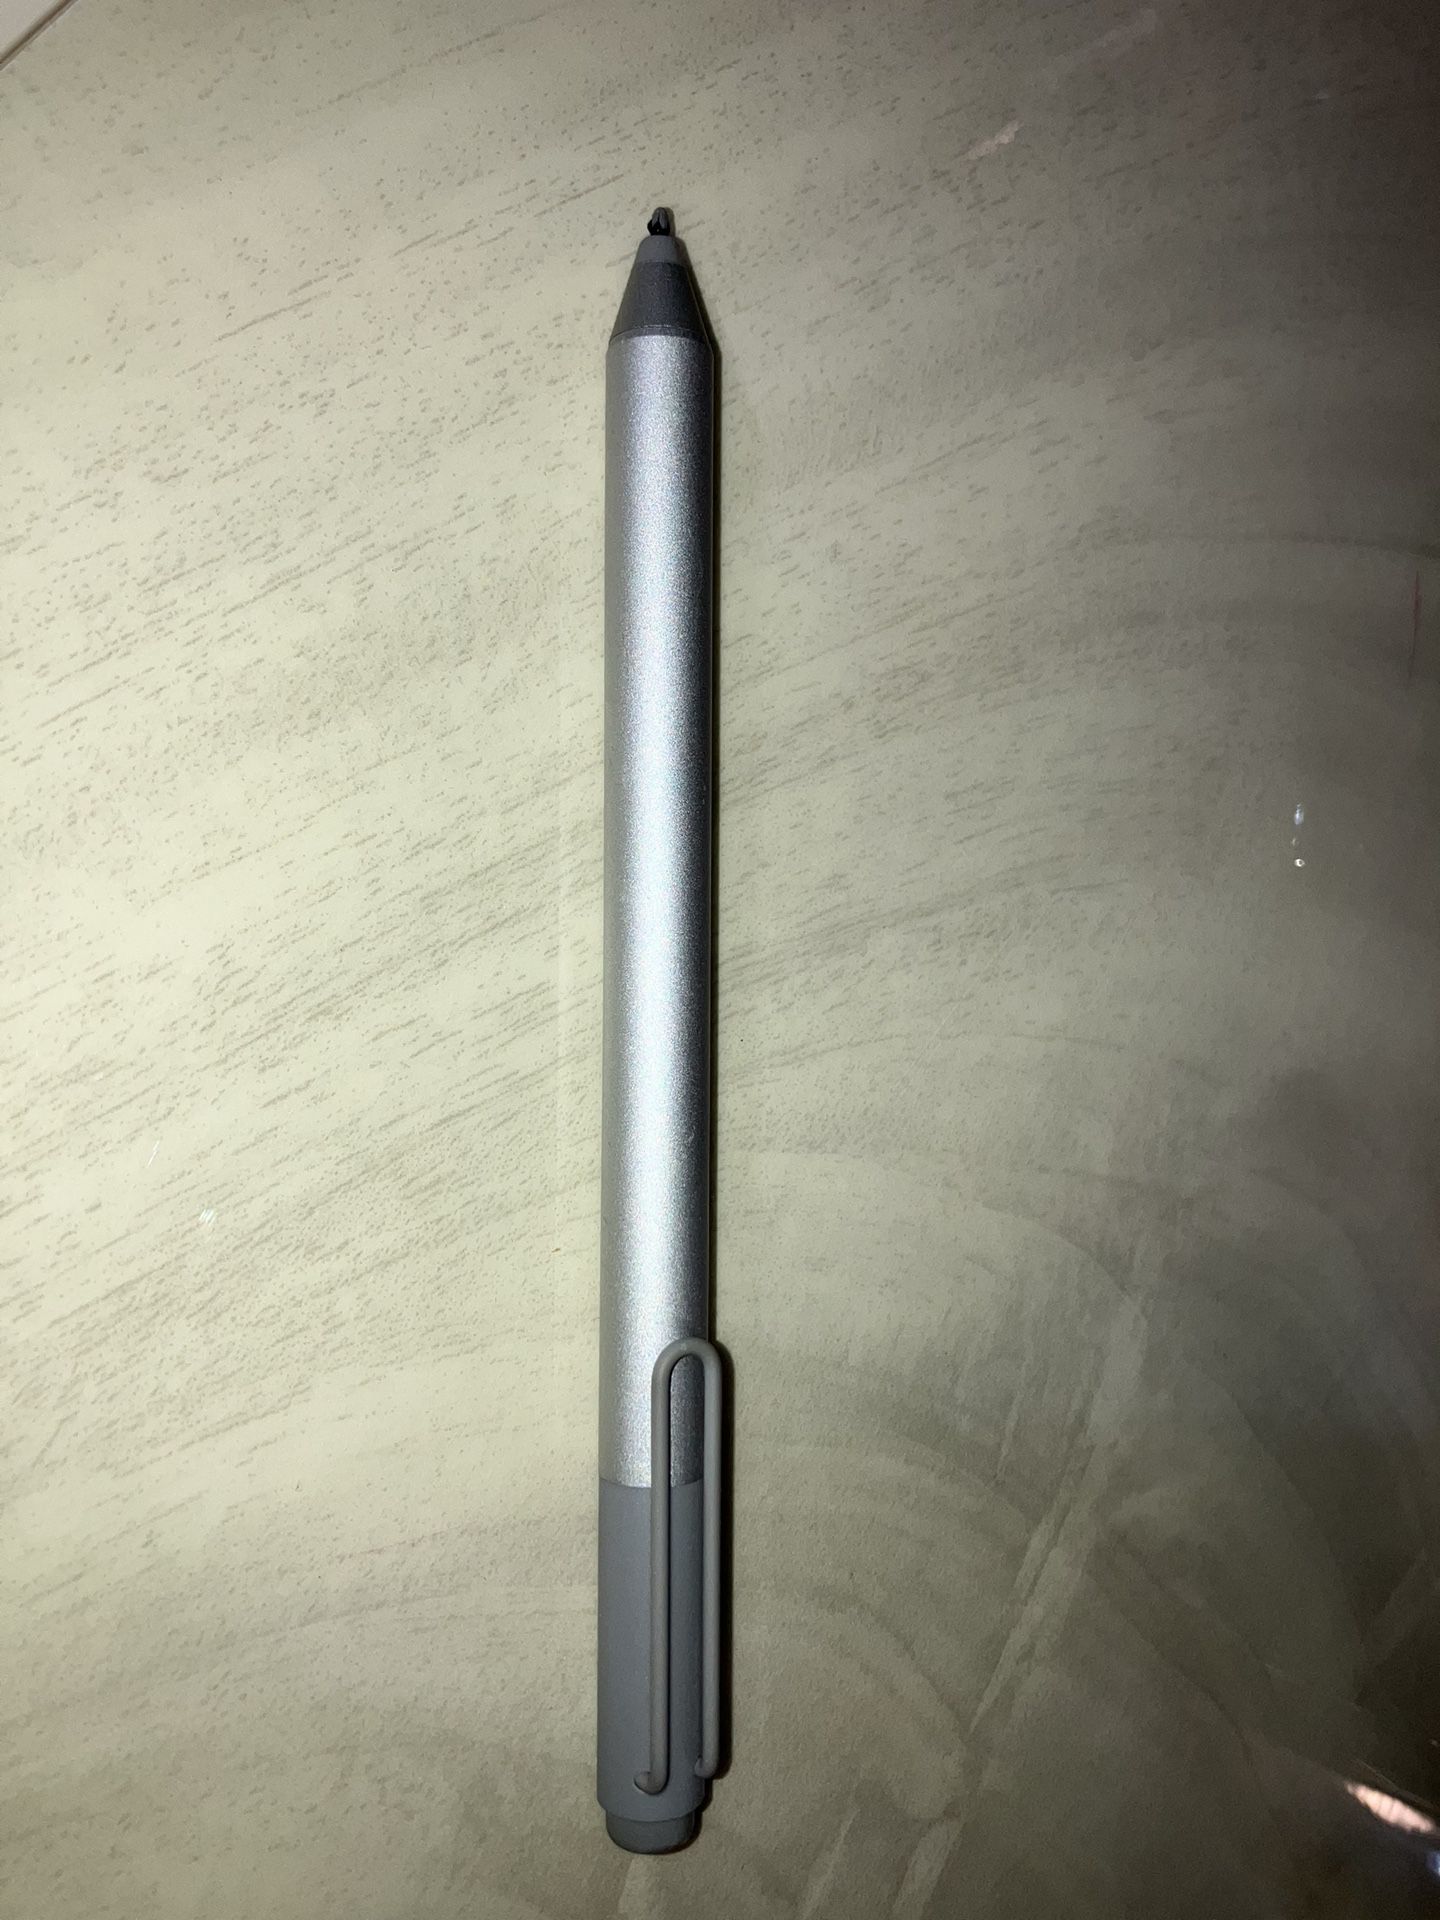 Microsoft Surface Pro 4 Pen Stylus Model 1710